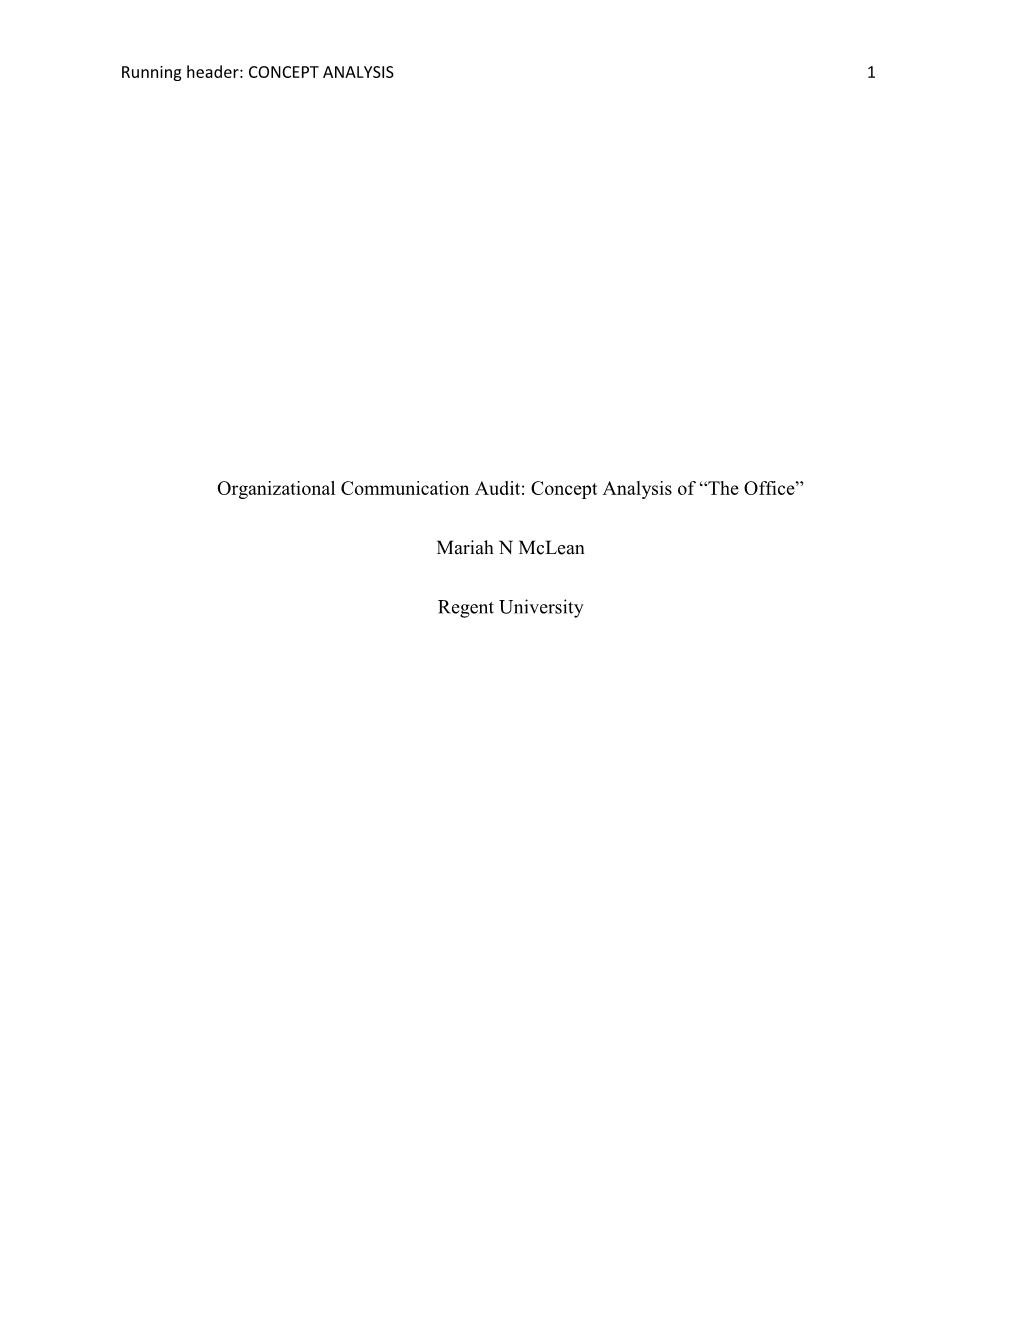 Organizational Communication Audit: Concept Analysis of “The Office” Mariah N Mclean Regent University